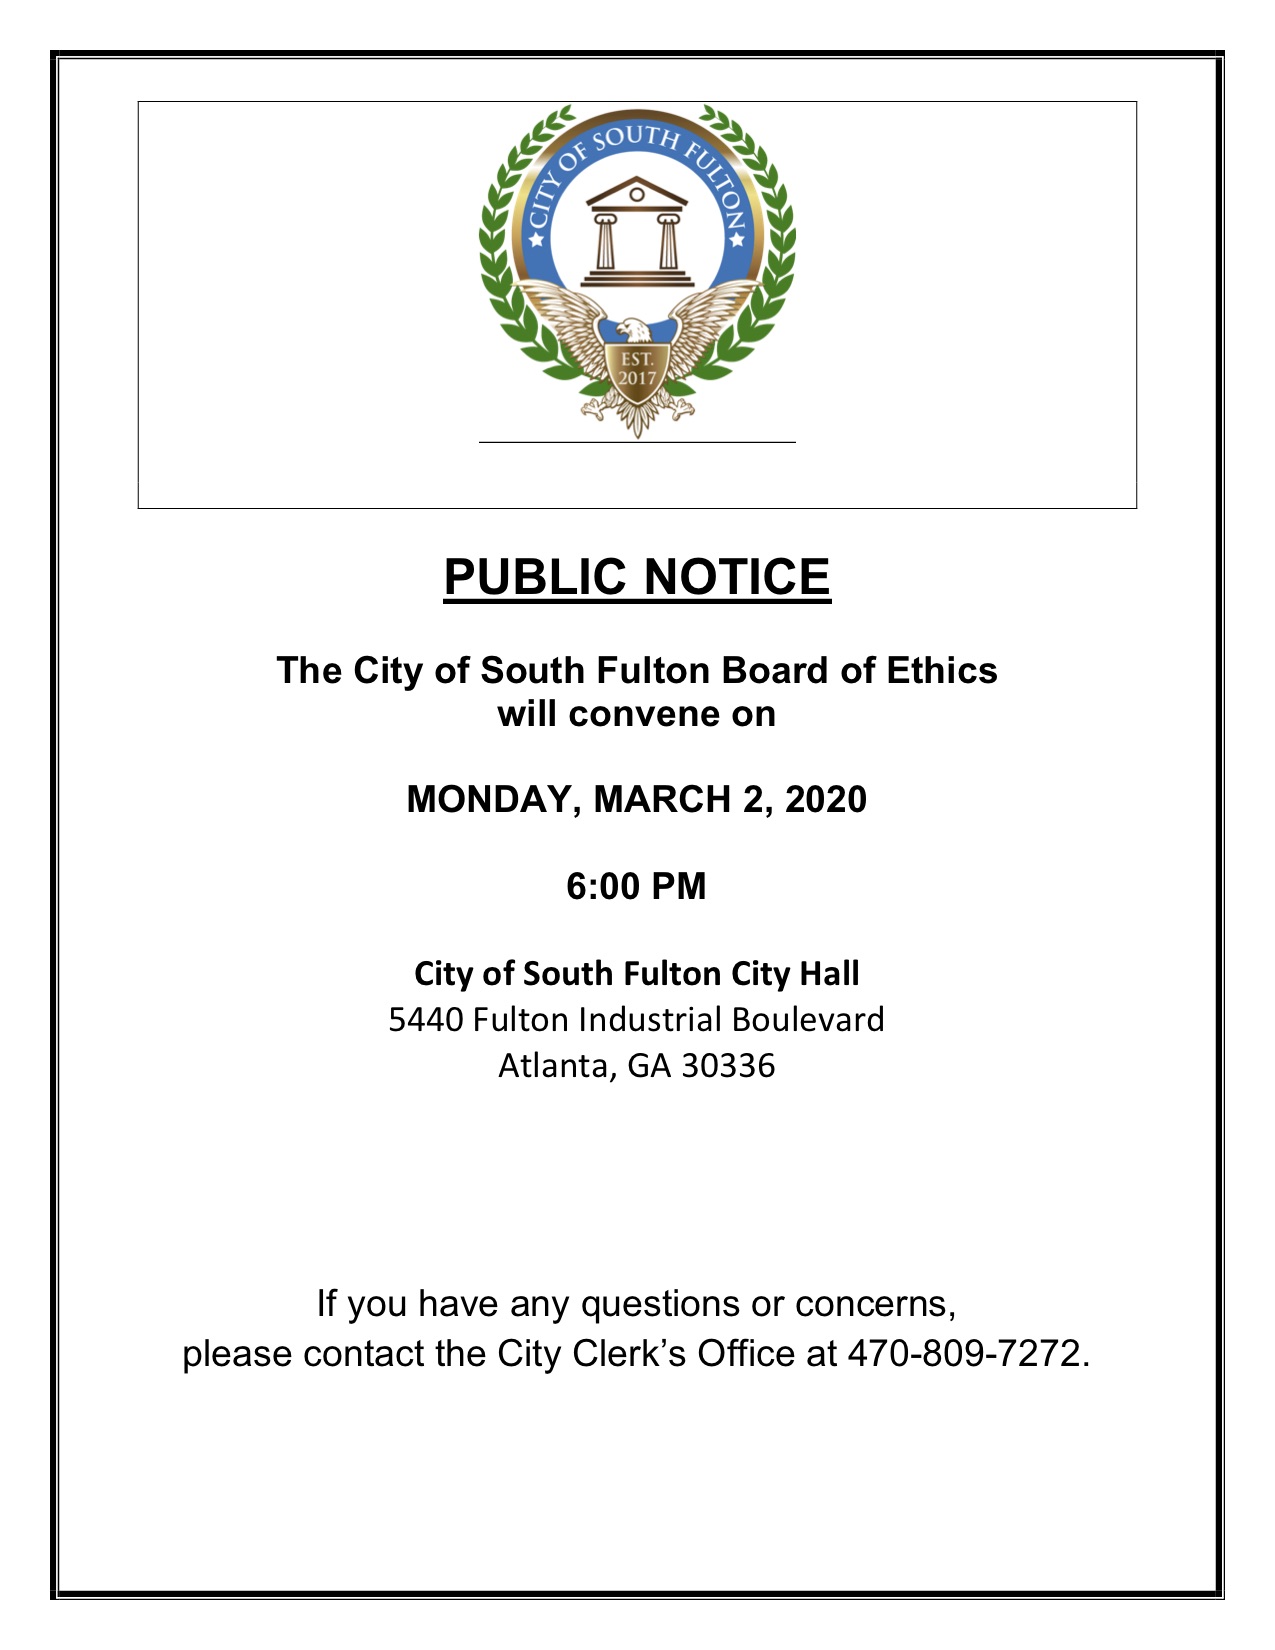 South Fulton Public Notice Board of Ethics